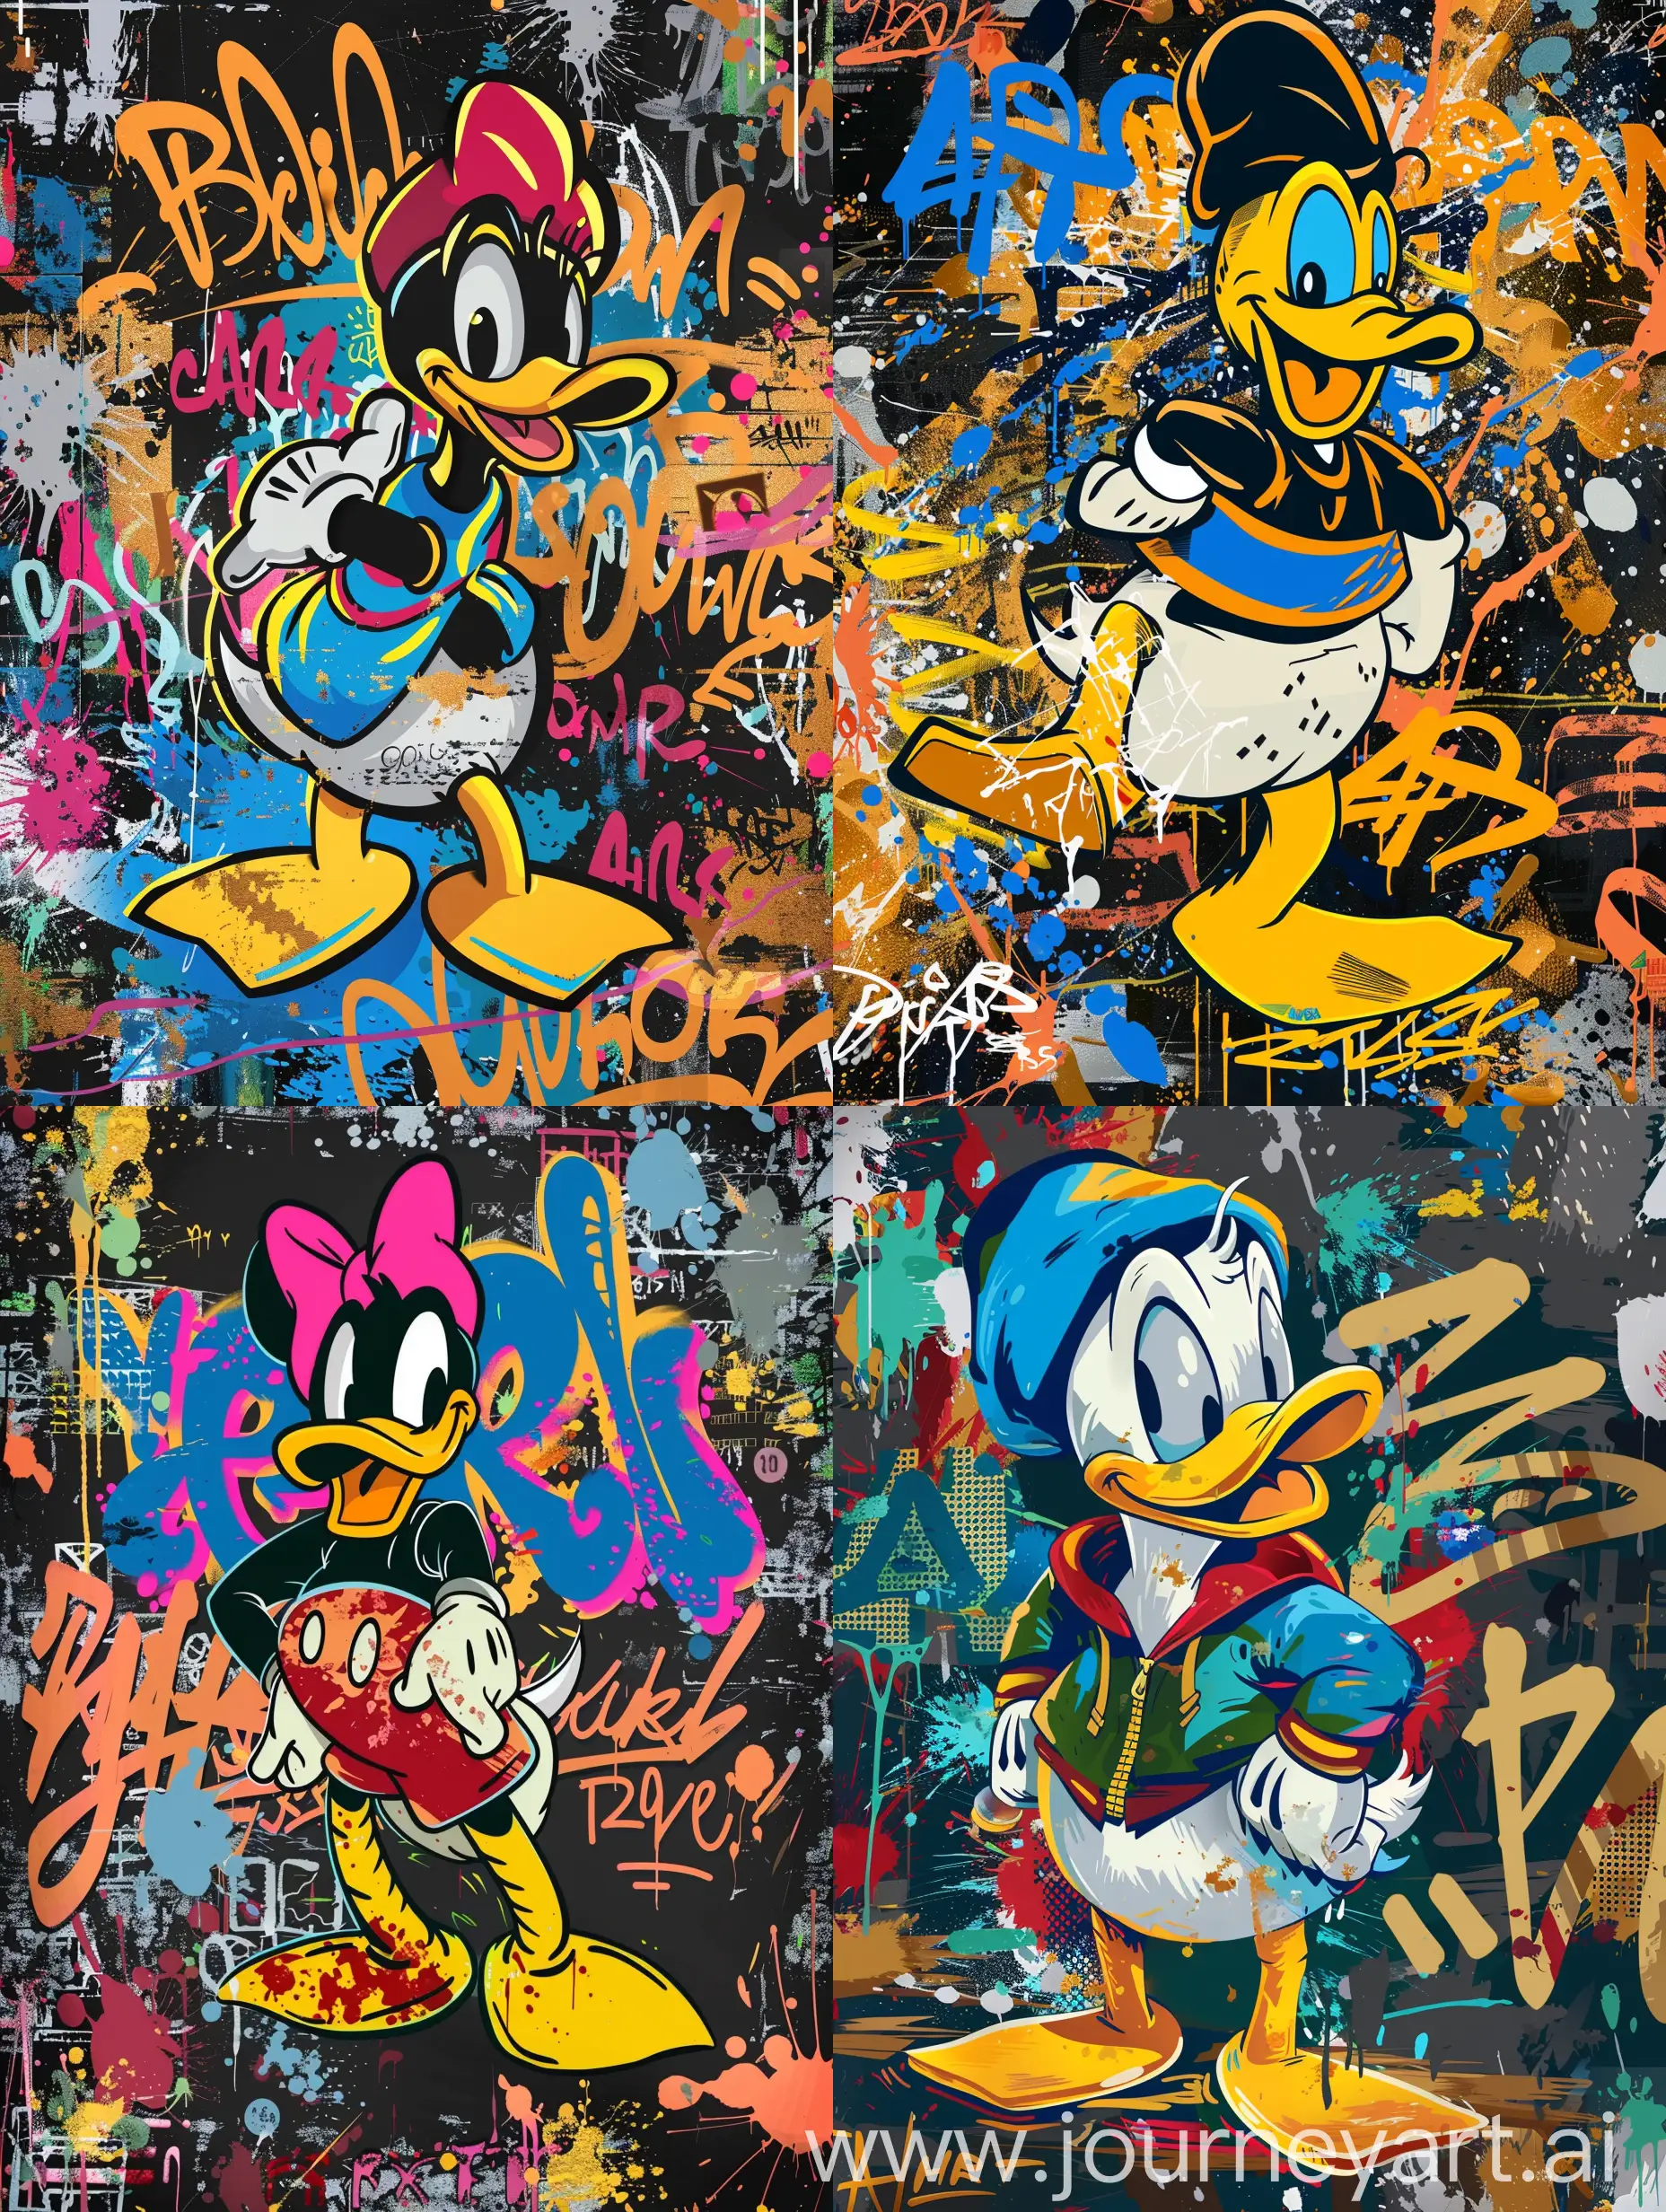 Vibrant-Urban-Street-Art-Donald-Duck-Graffiti-Illustration